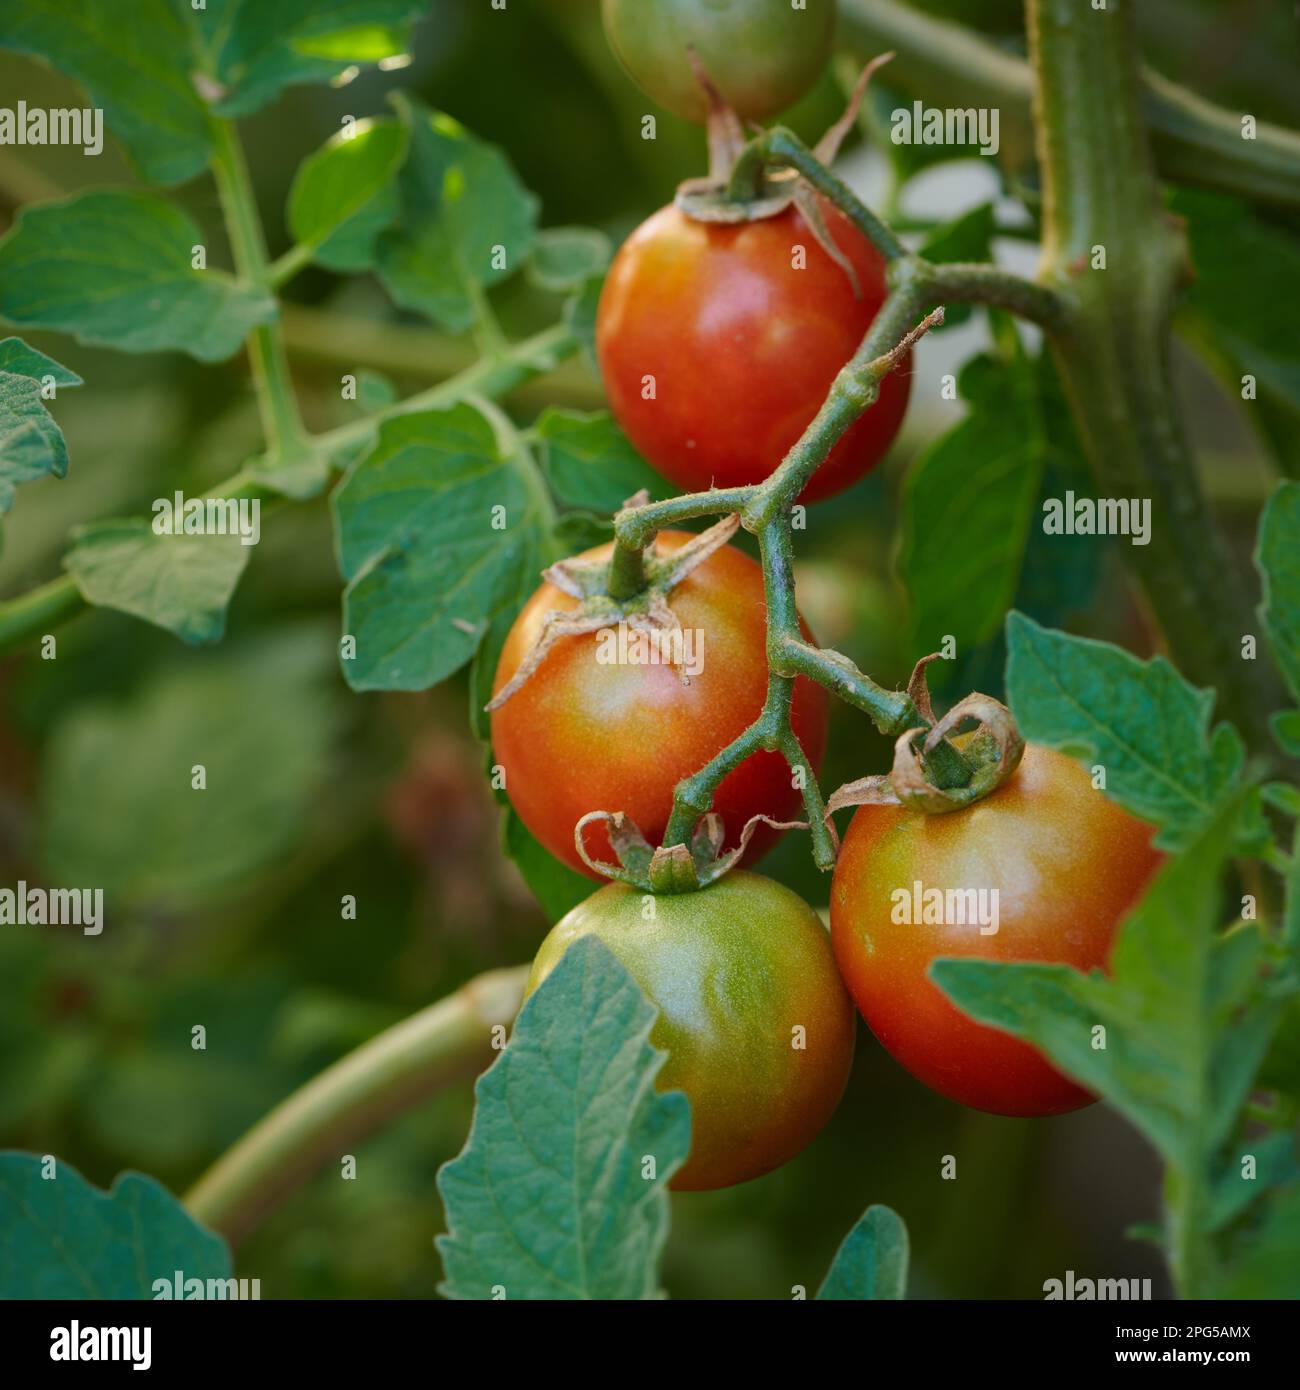 Organic Beefsteak Tomatoes growing on the vine variety 'Big Boy